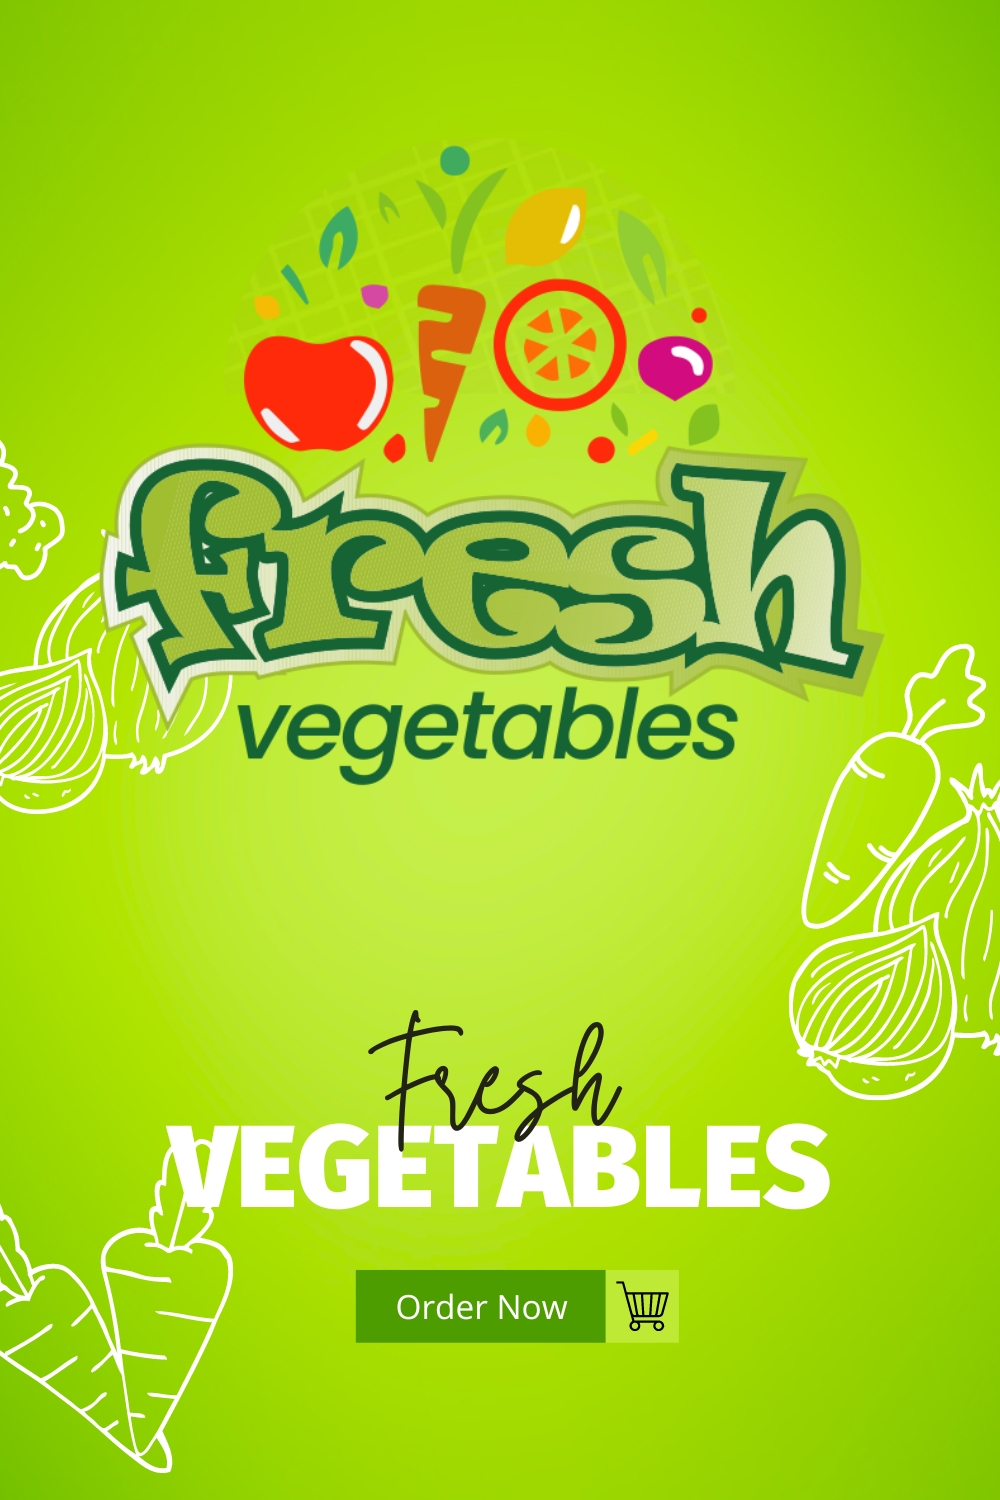 Fresh Vegetables - Logo design - Only $10 pinterest preview image.